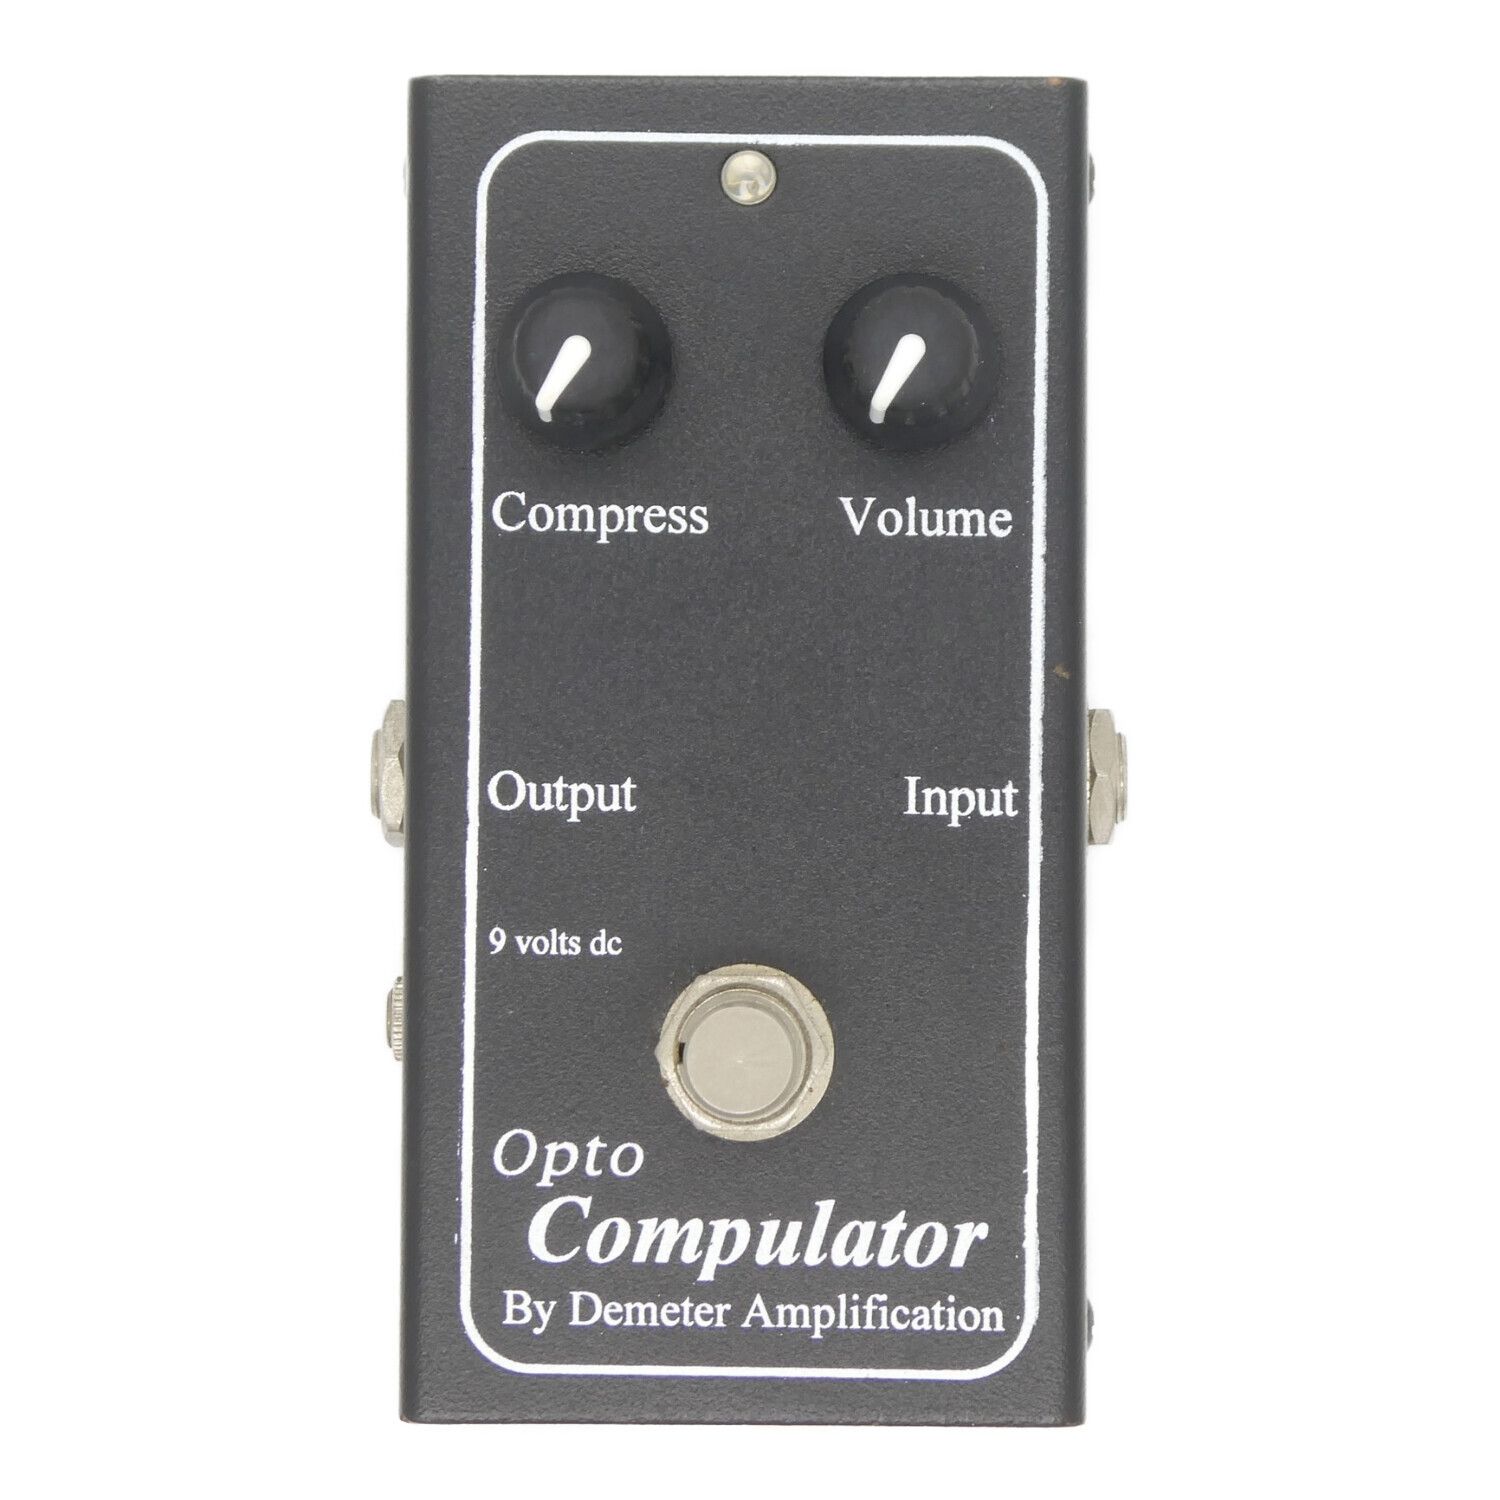 DEMETER (デメーター) COMP-1 Opto Compulator コンプレッサー ...